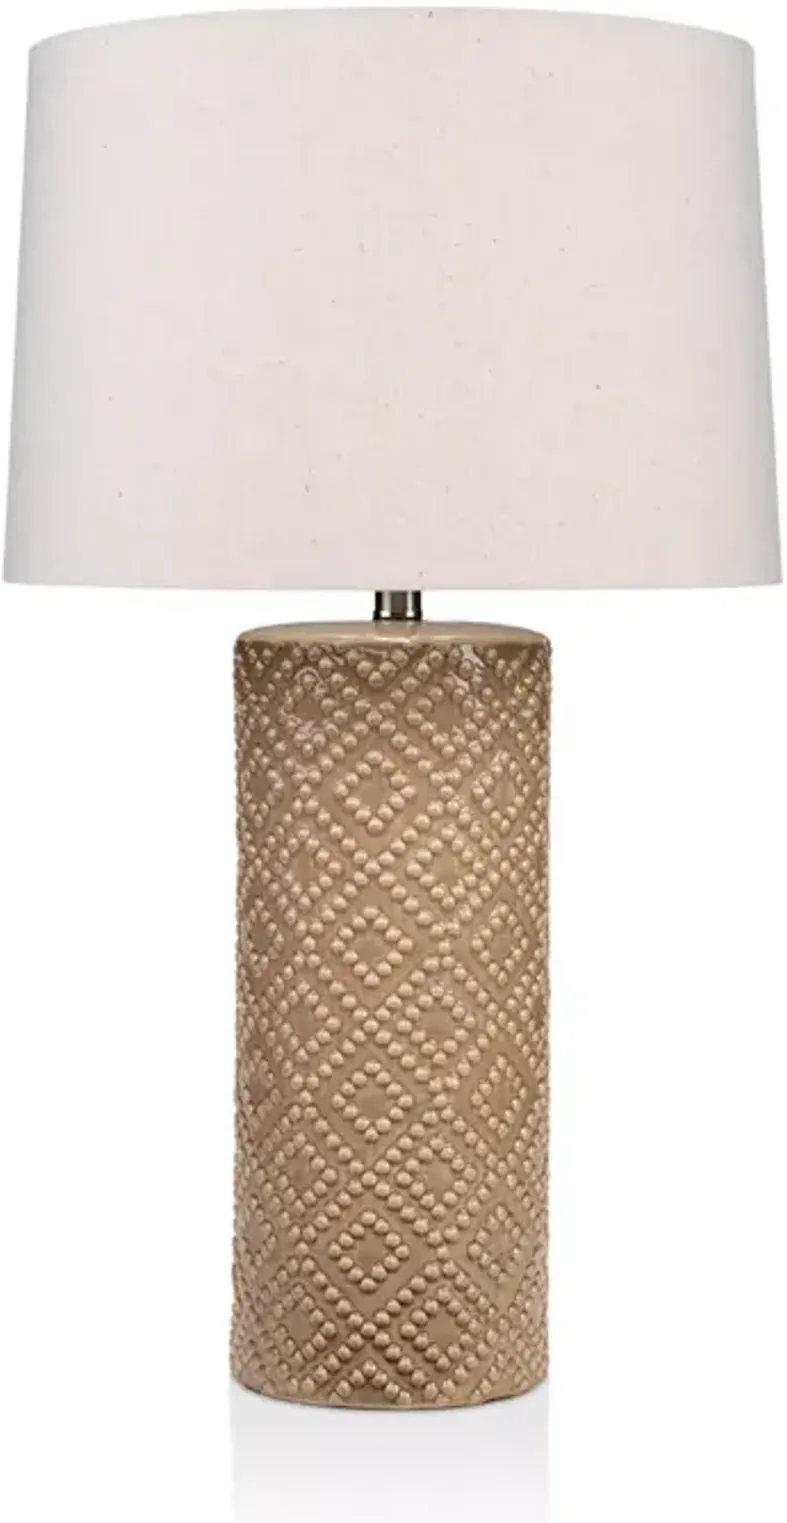 Bloomingdale's Albi Table Lamp - 100% Exclusive